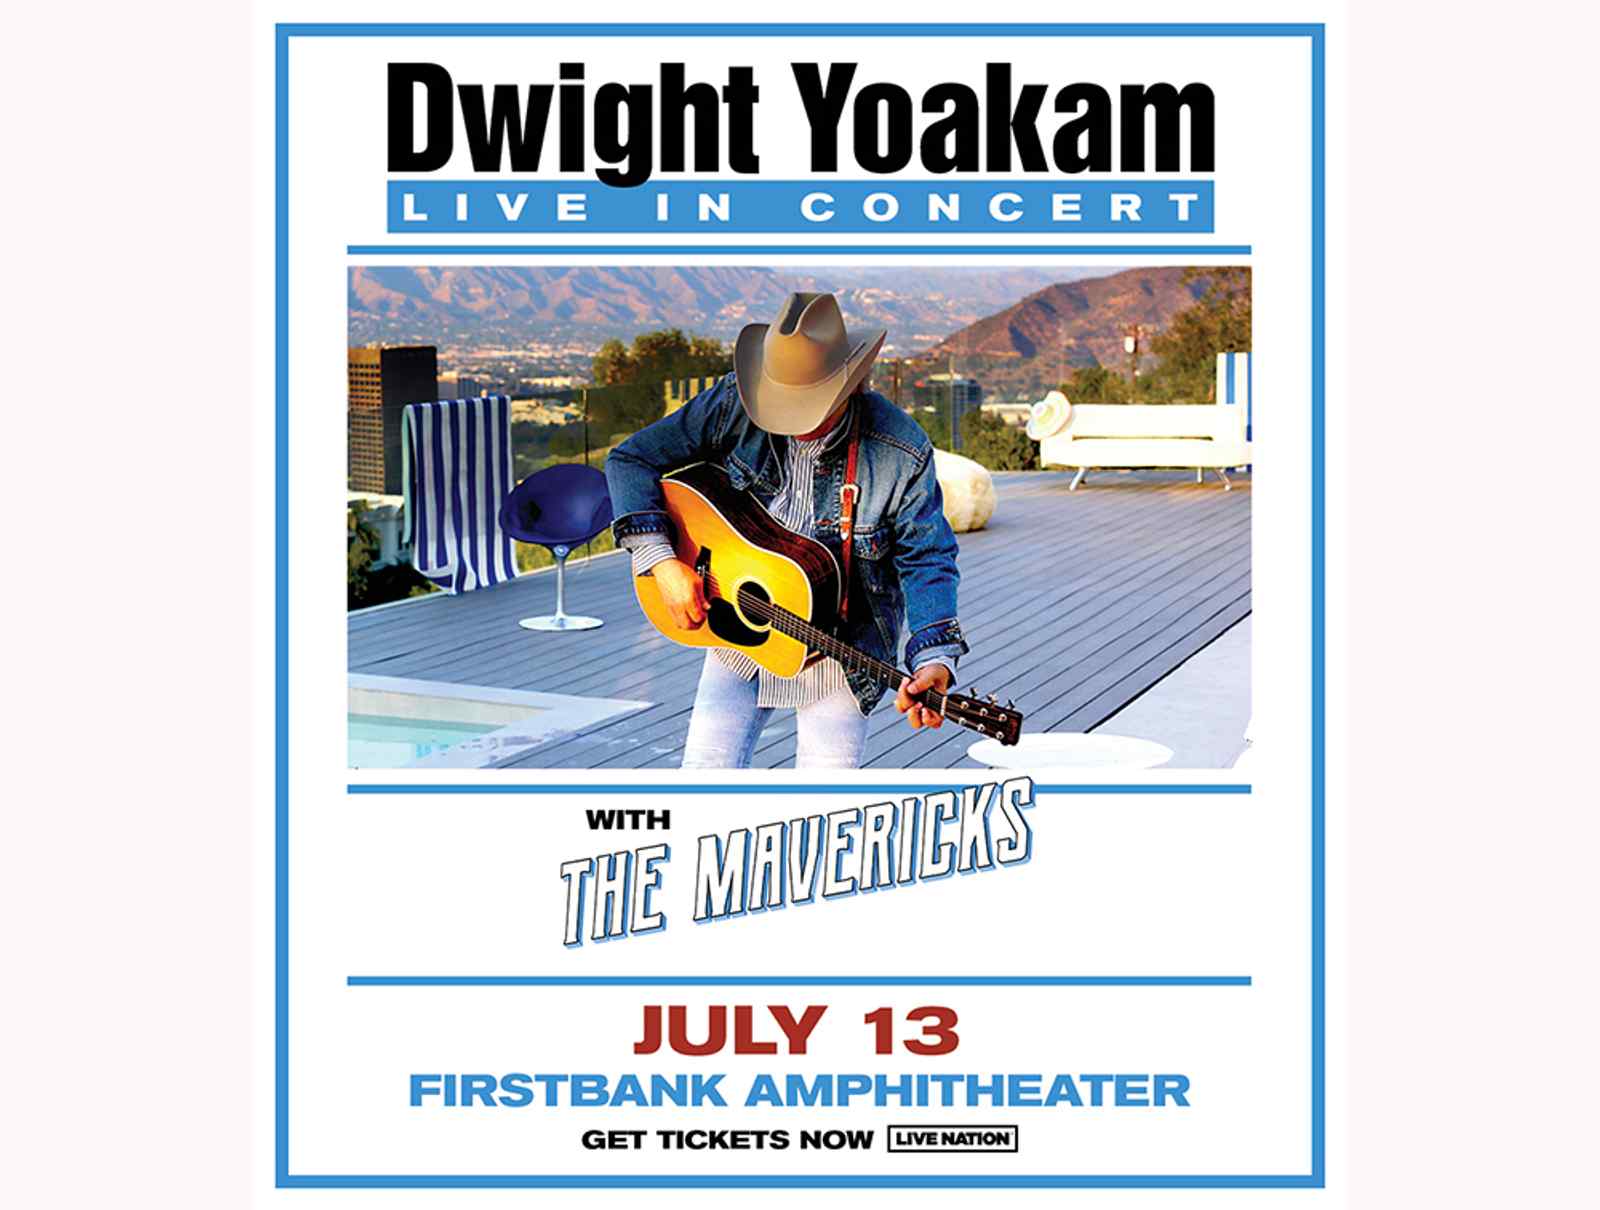 Dwight Yoakam with The Mavericks in Franklin, Tenn., at FirstBank Amphitheater.